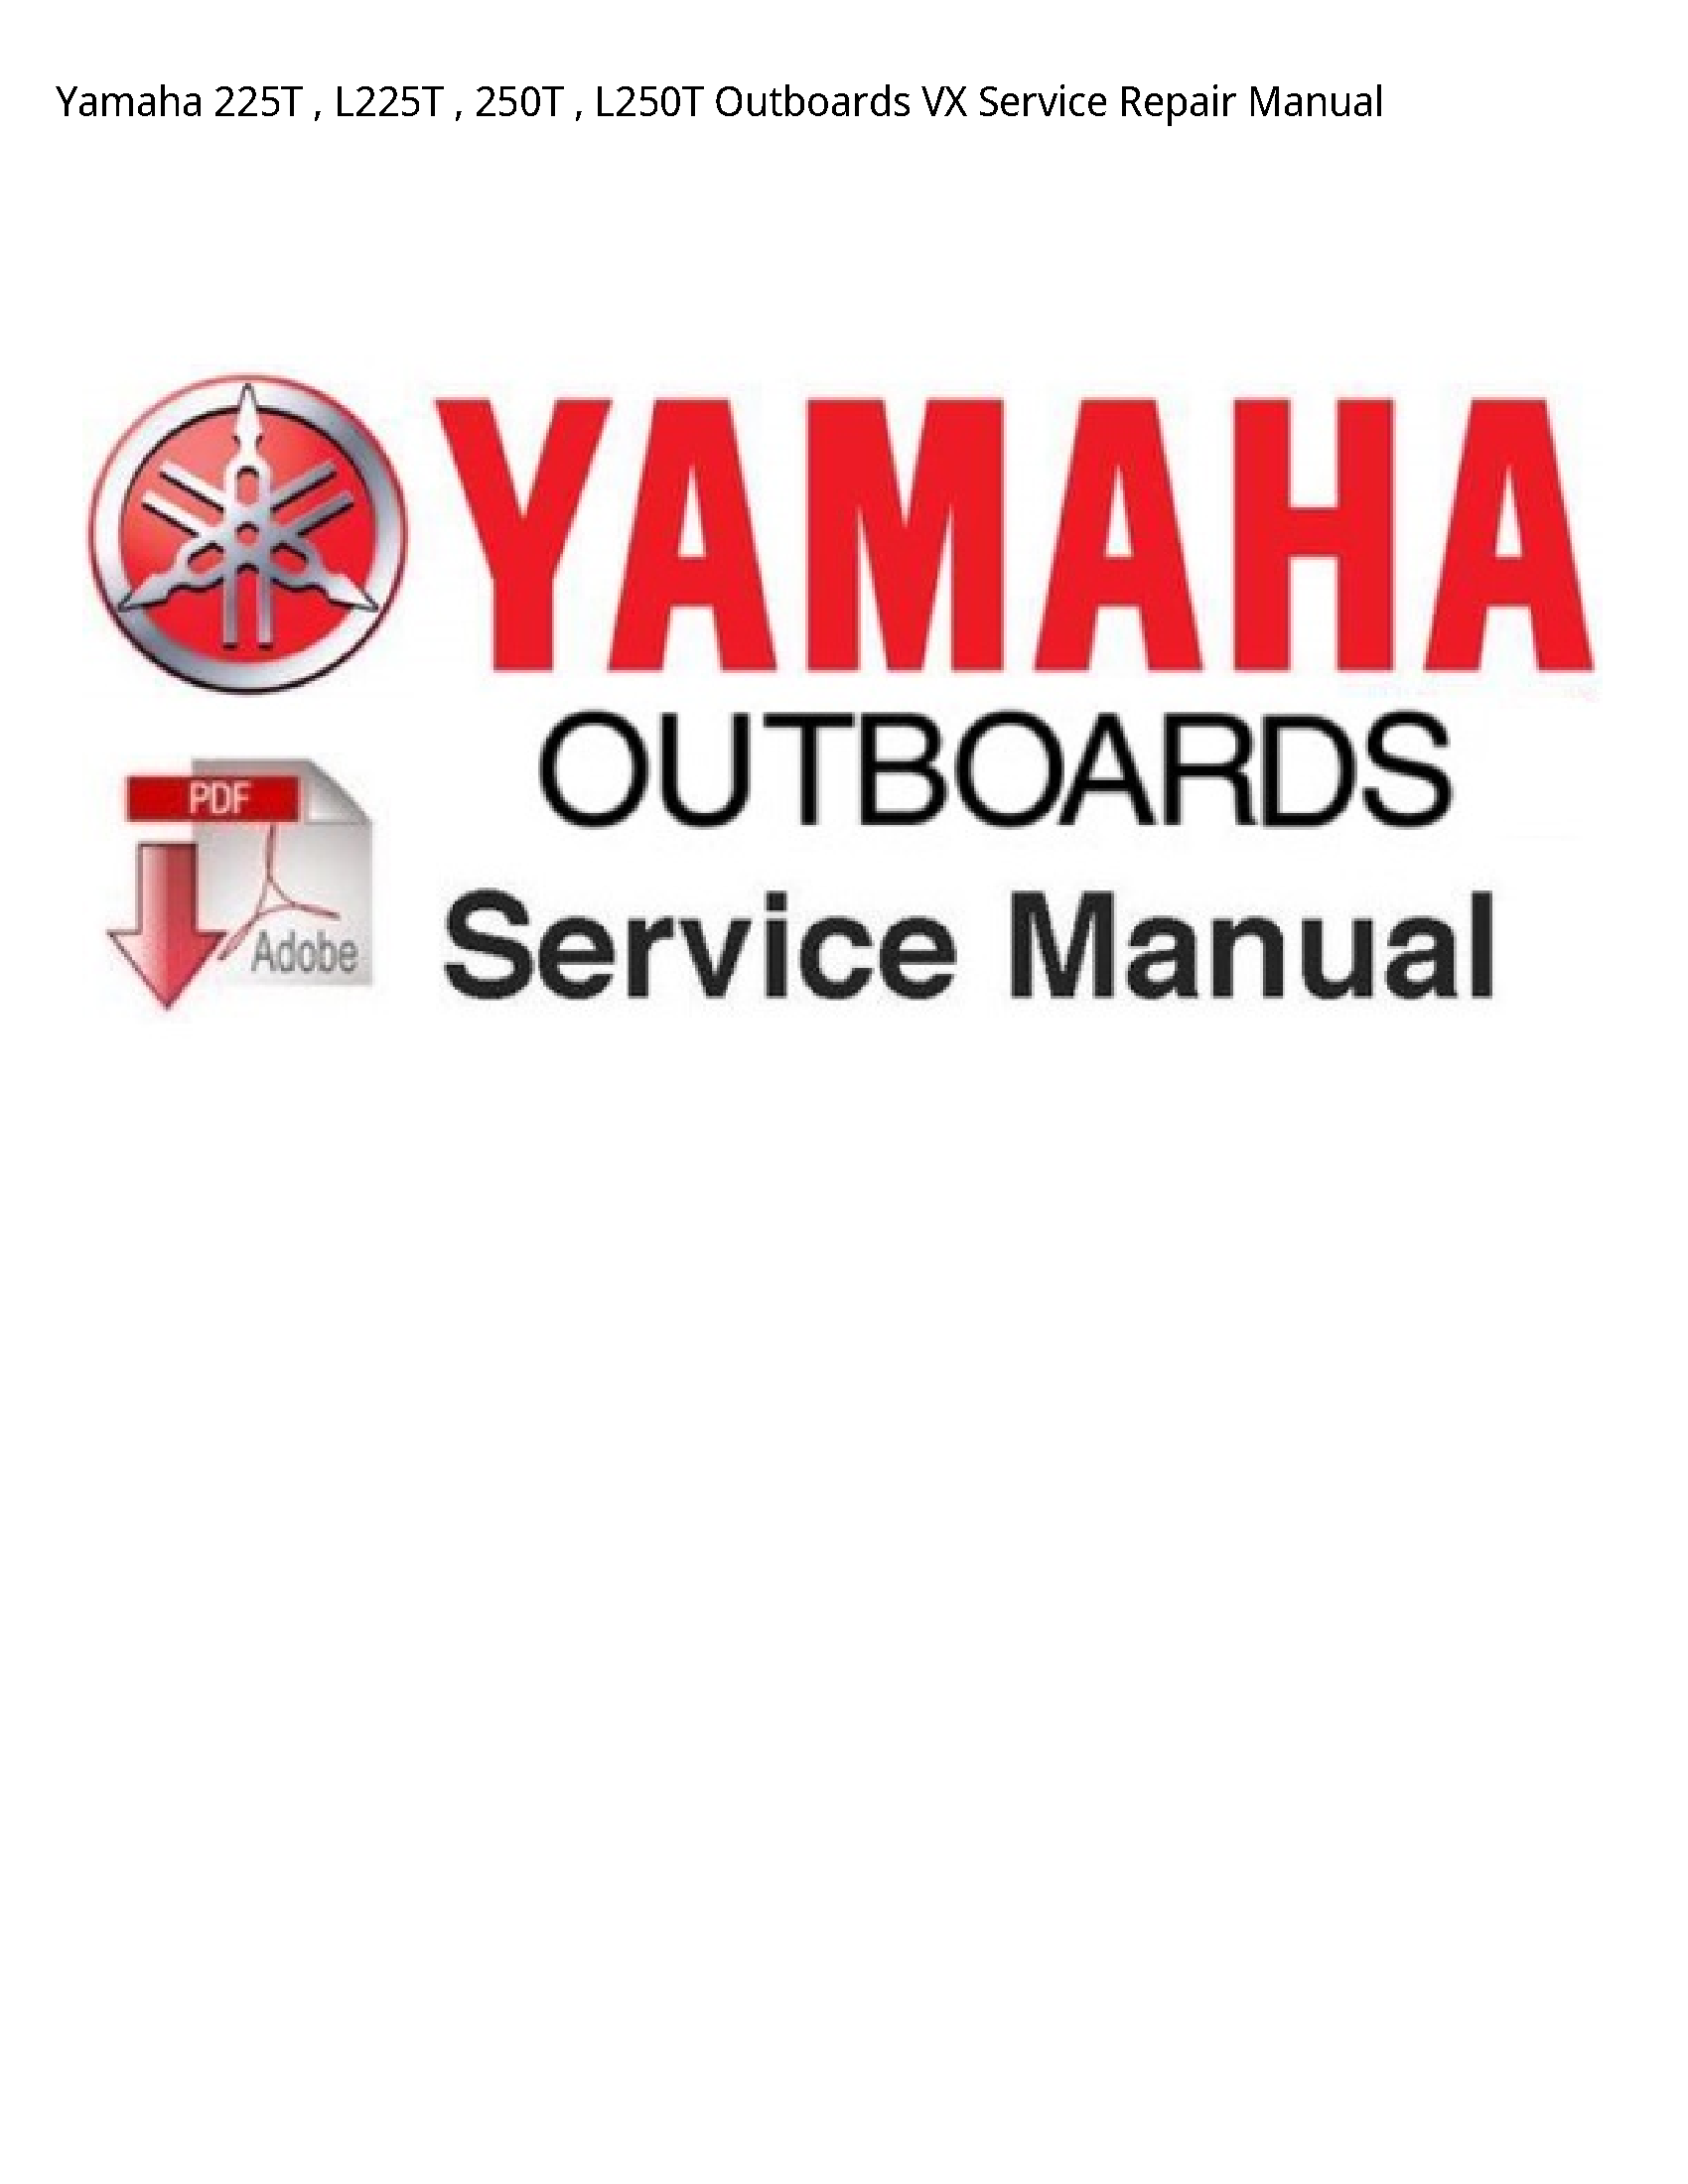 Yamaha 225T Outboards VX manual